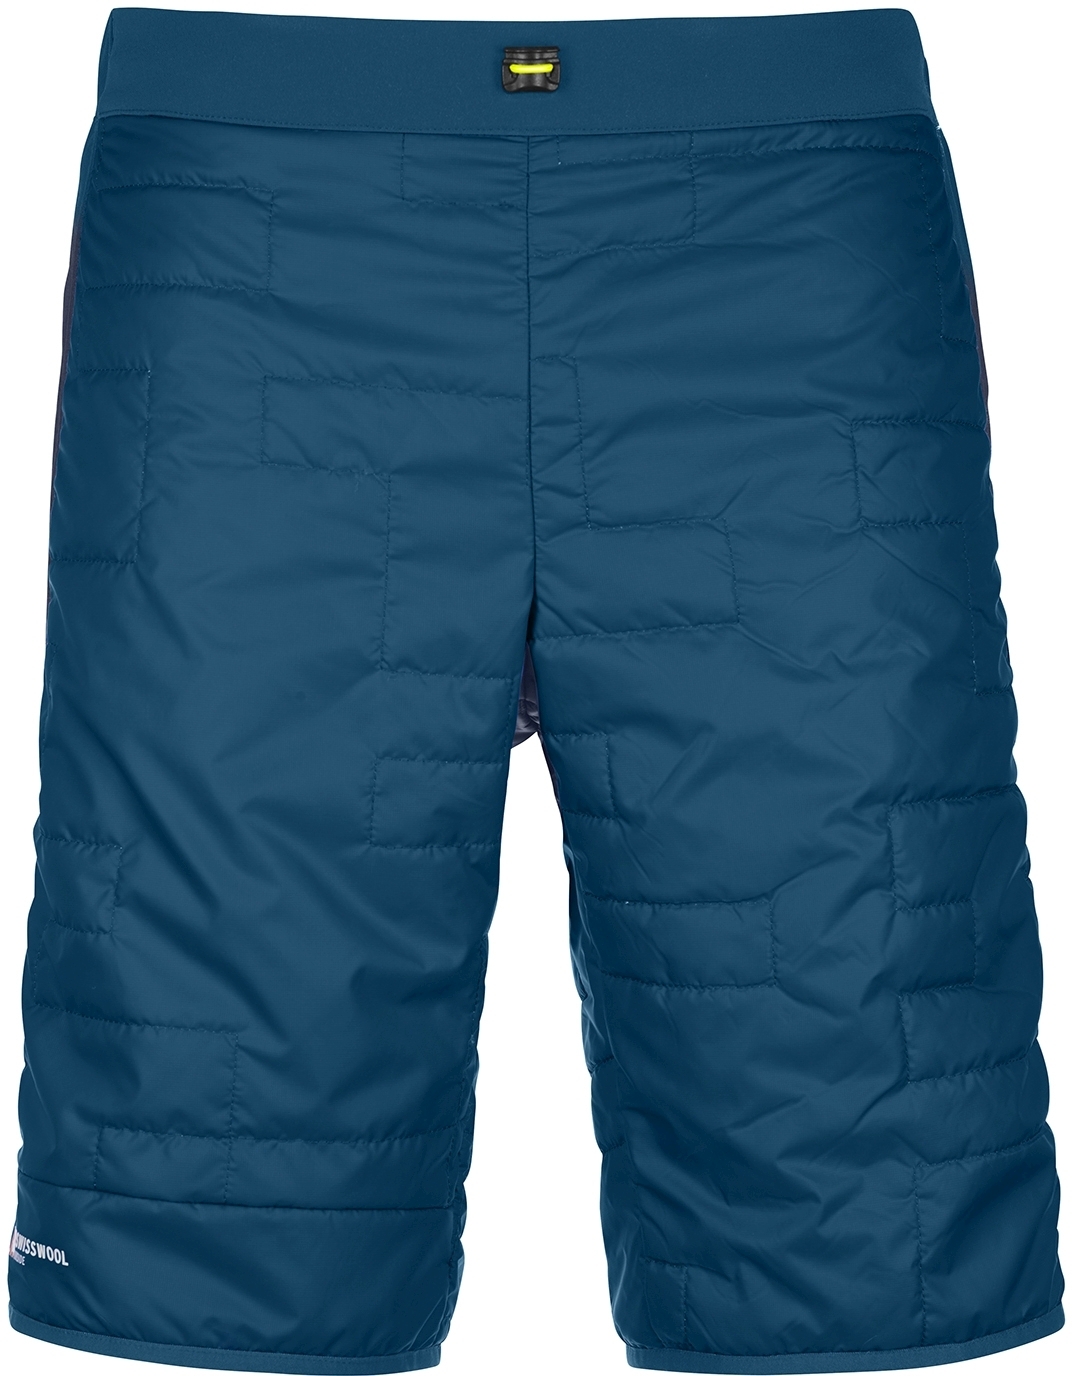 E-shop Ortovox Swisswool piz boe shorts m - petrol blue XXL